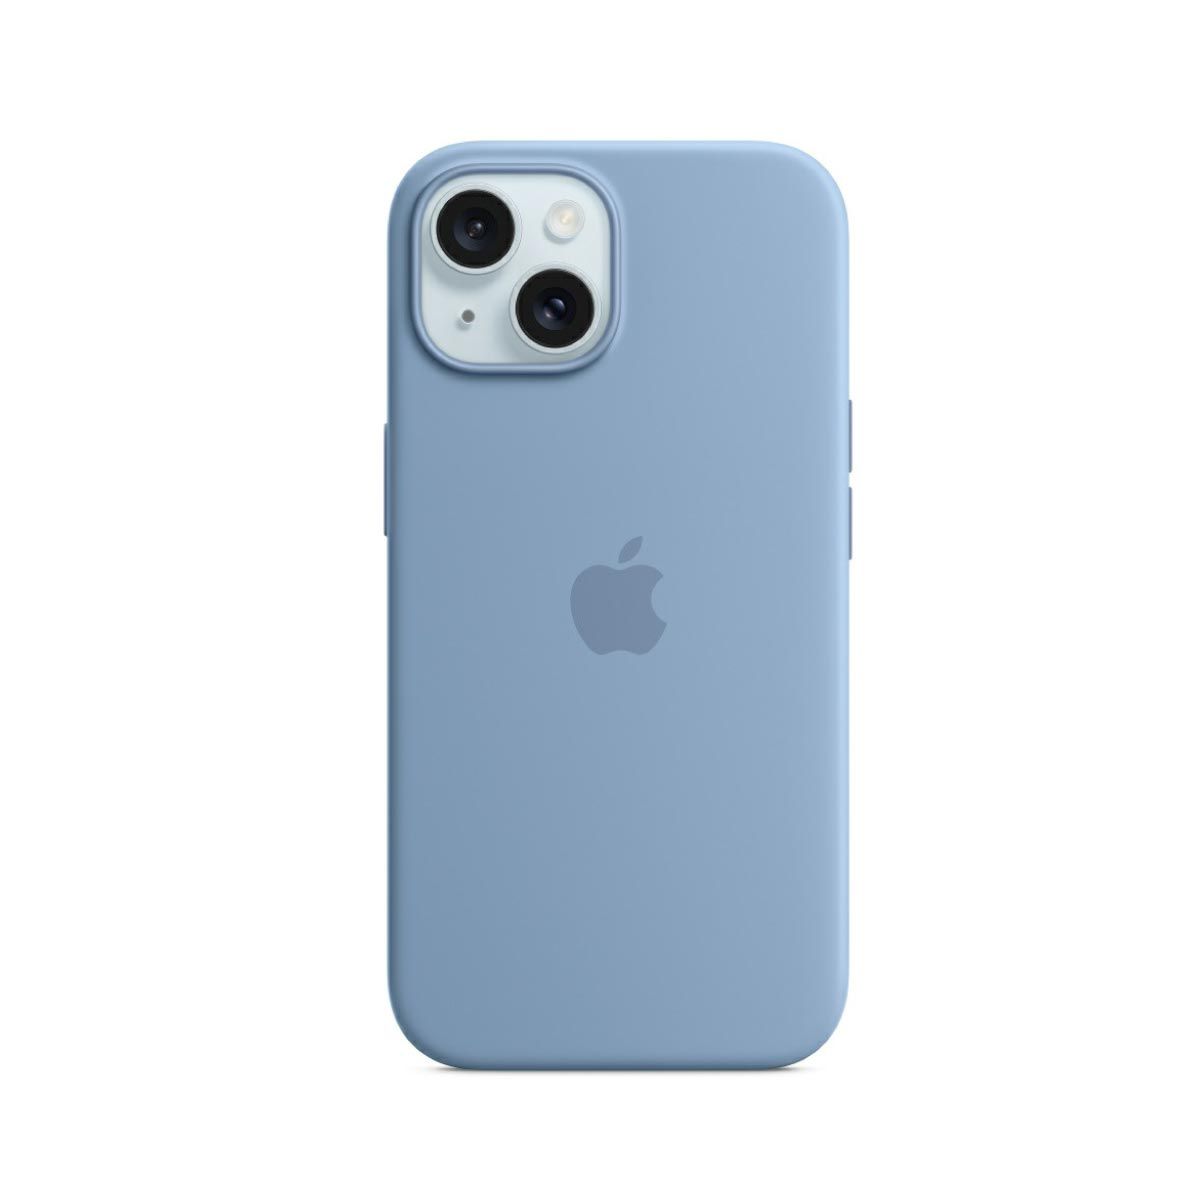 Apple Case เคสซิลิโคนสำหรับ iPhone 15  พร้อม MagSafe -สีฟ้าวินเทอร์